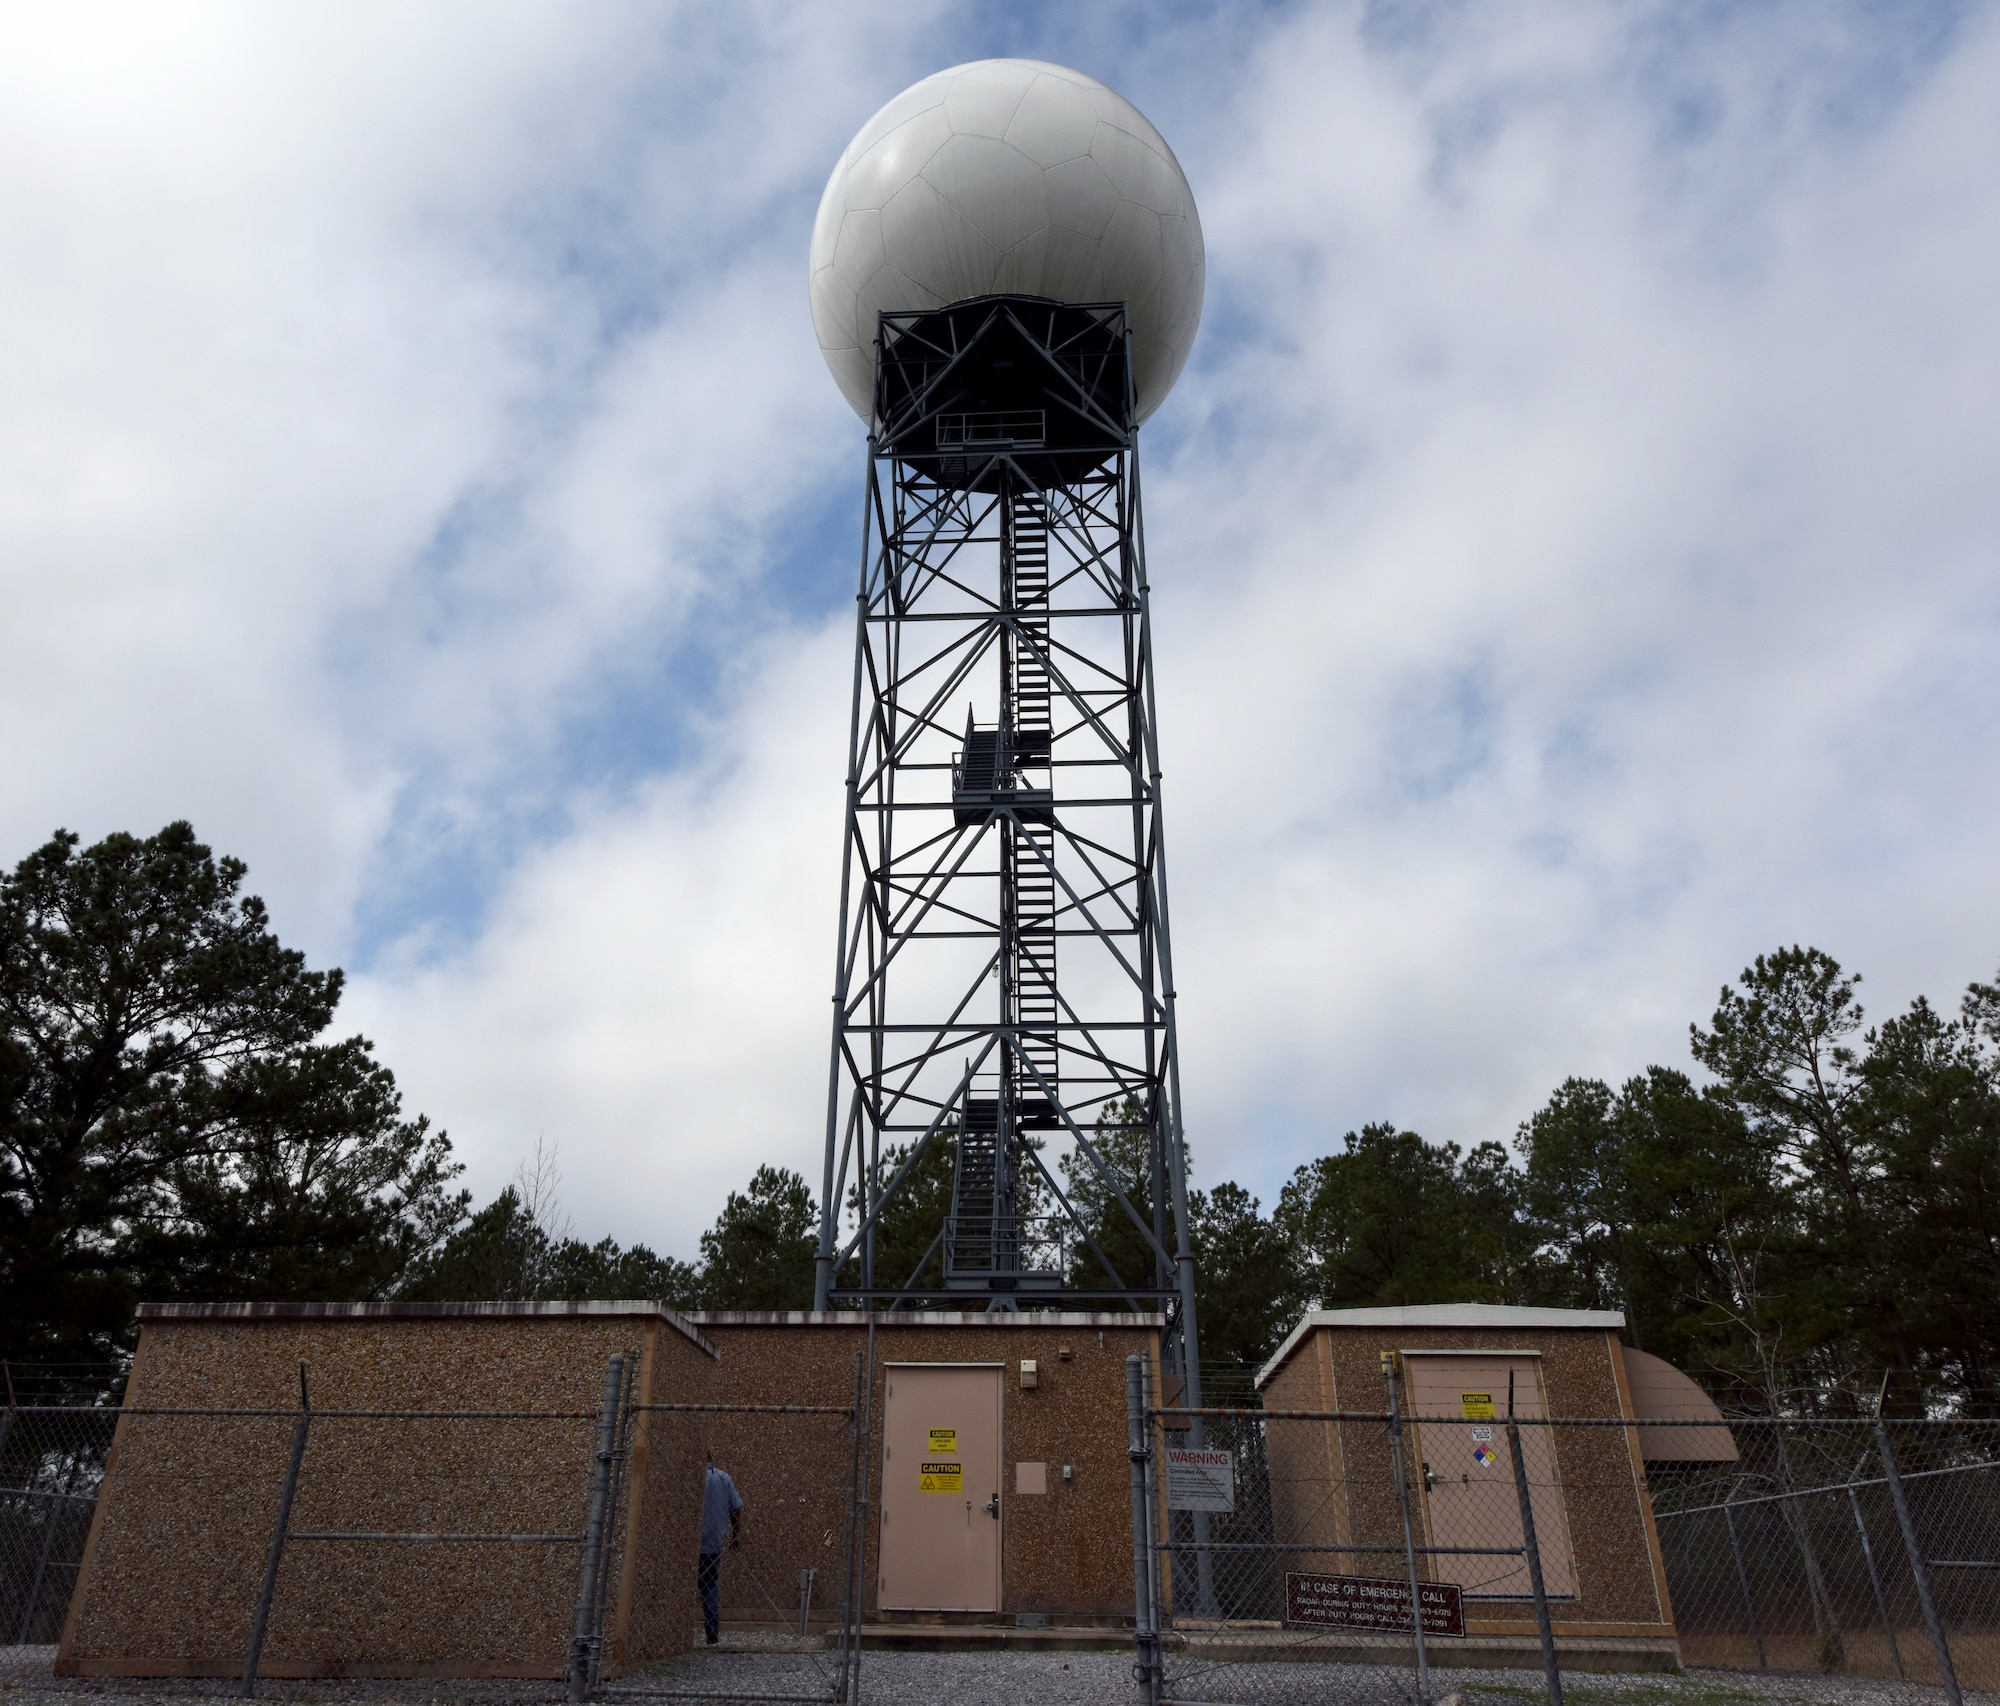 NEXRAD: Next Generation Radar impacts far and wide